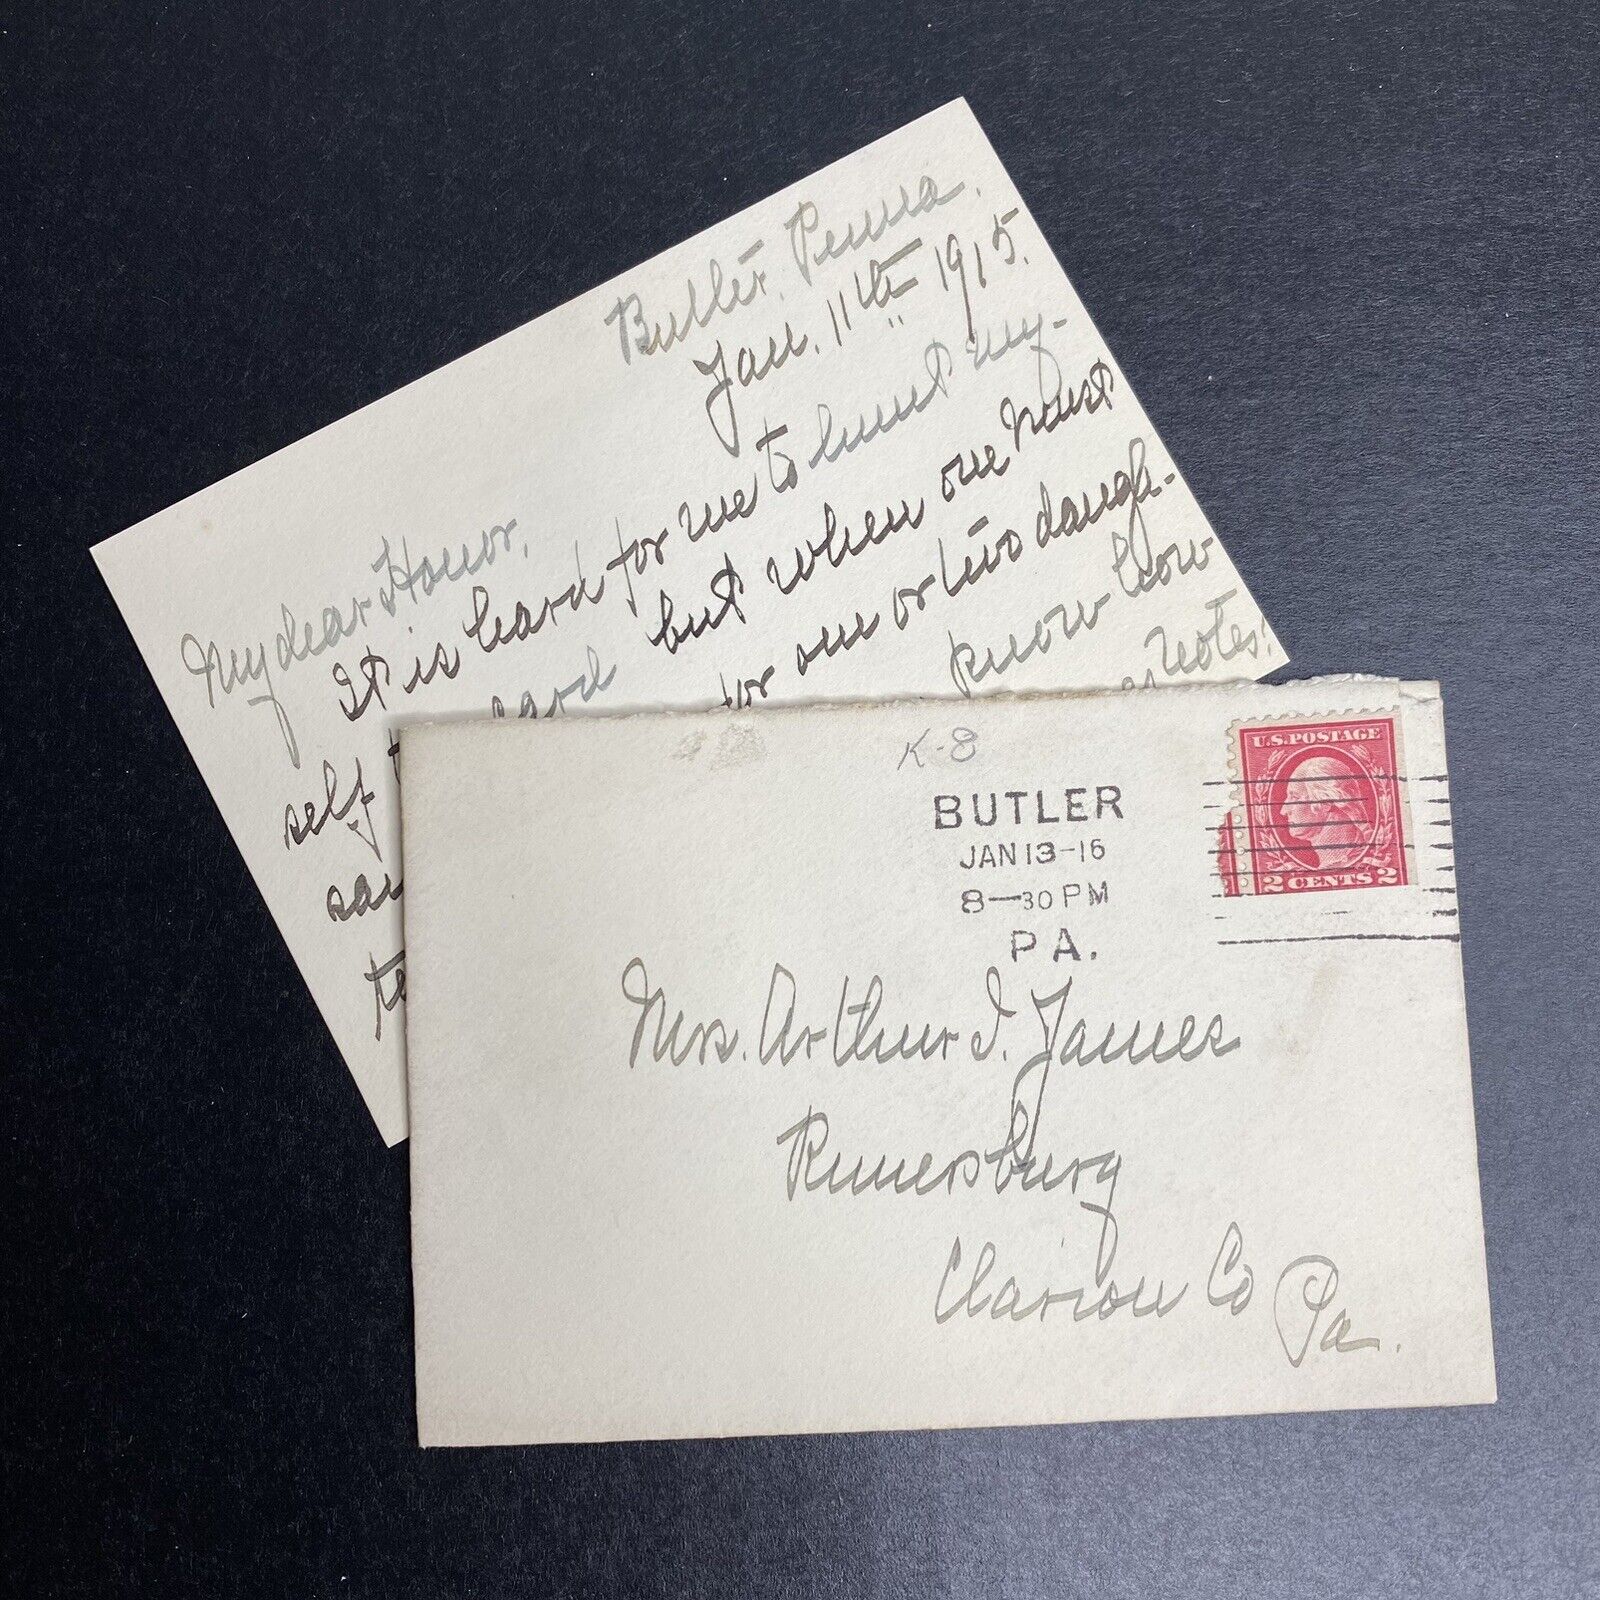 Antique 1915 Handwritten Post Card Postmark Cancelled Stamp Envelope Ephemera